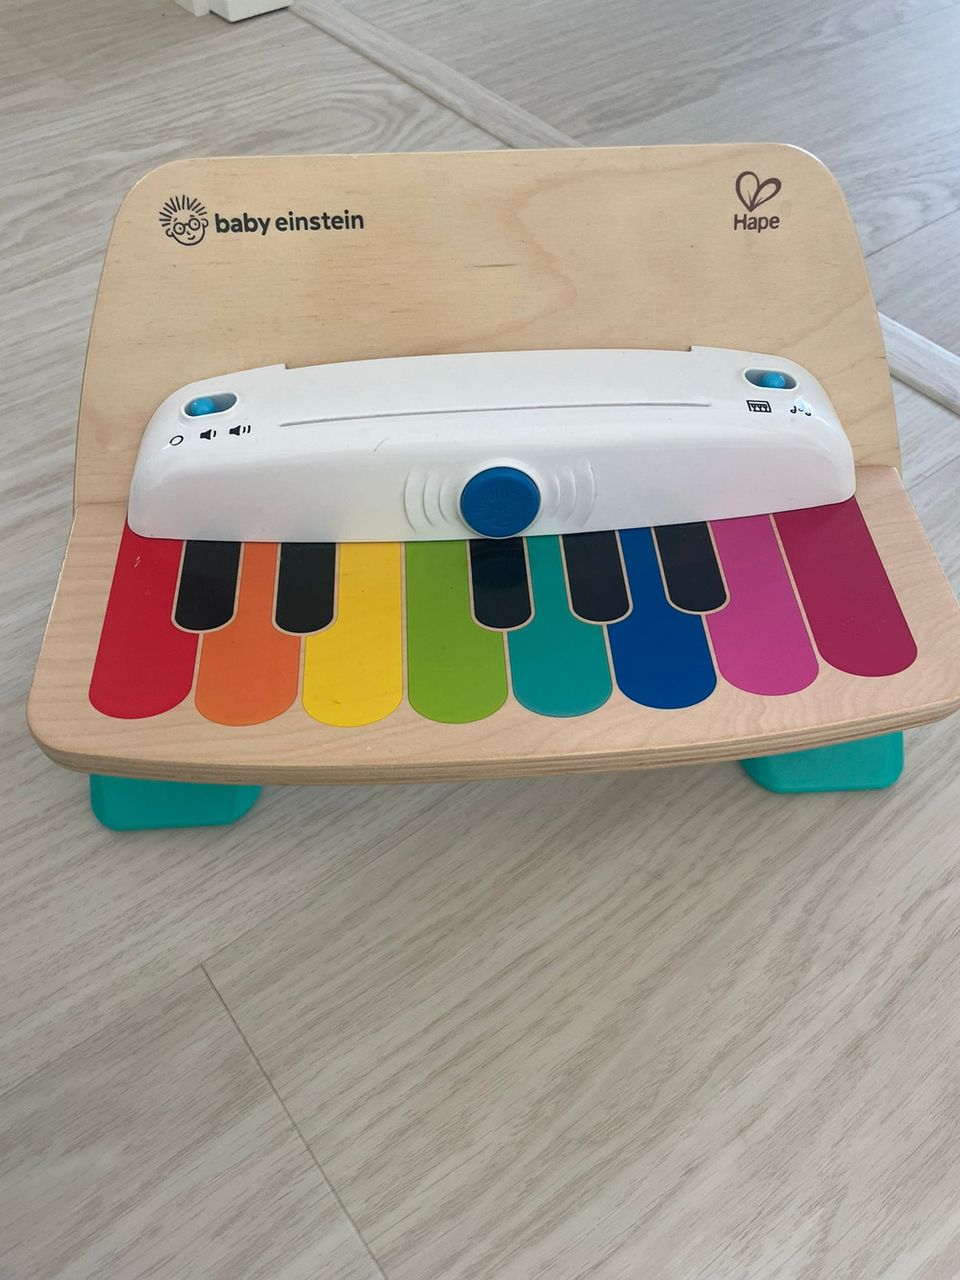 Hape Baby Einstein piano